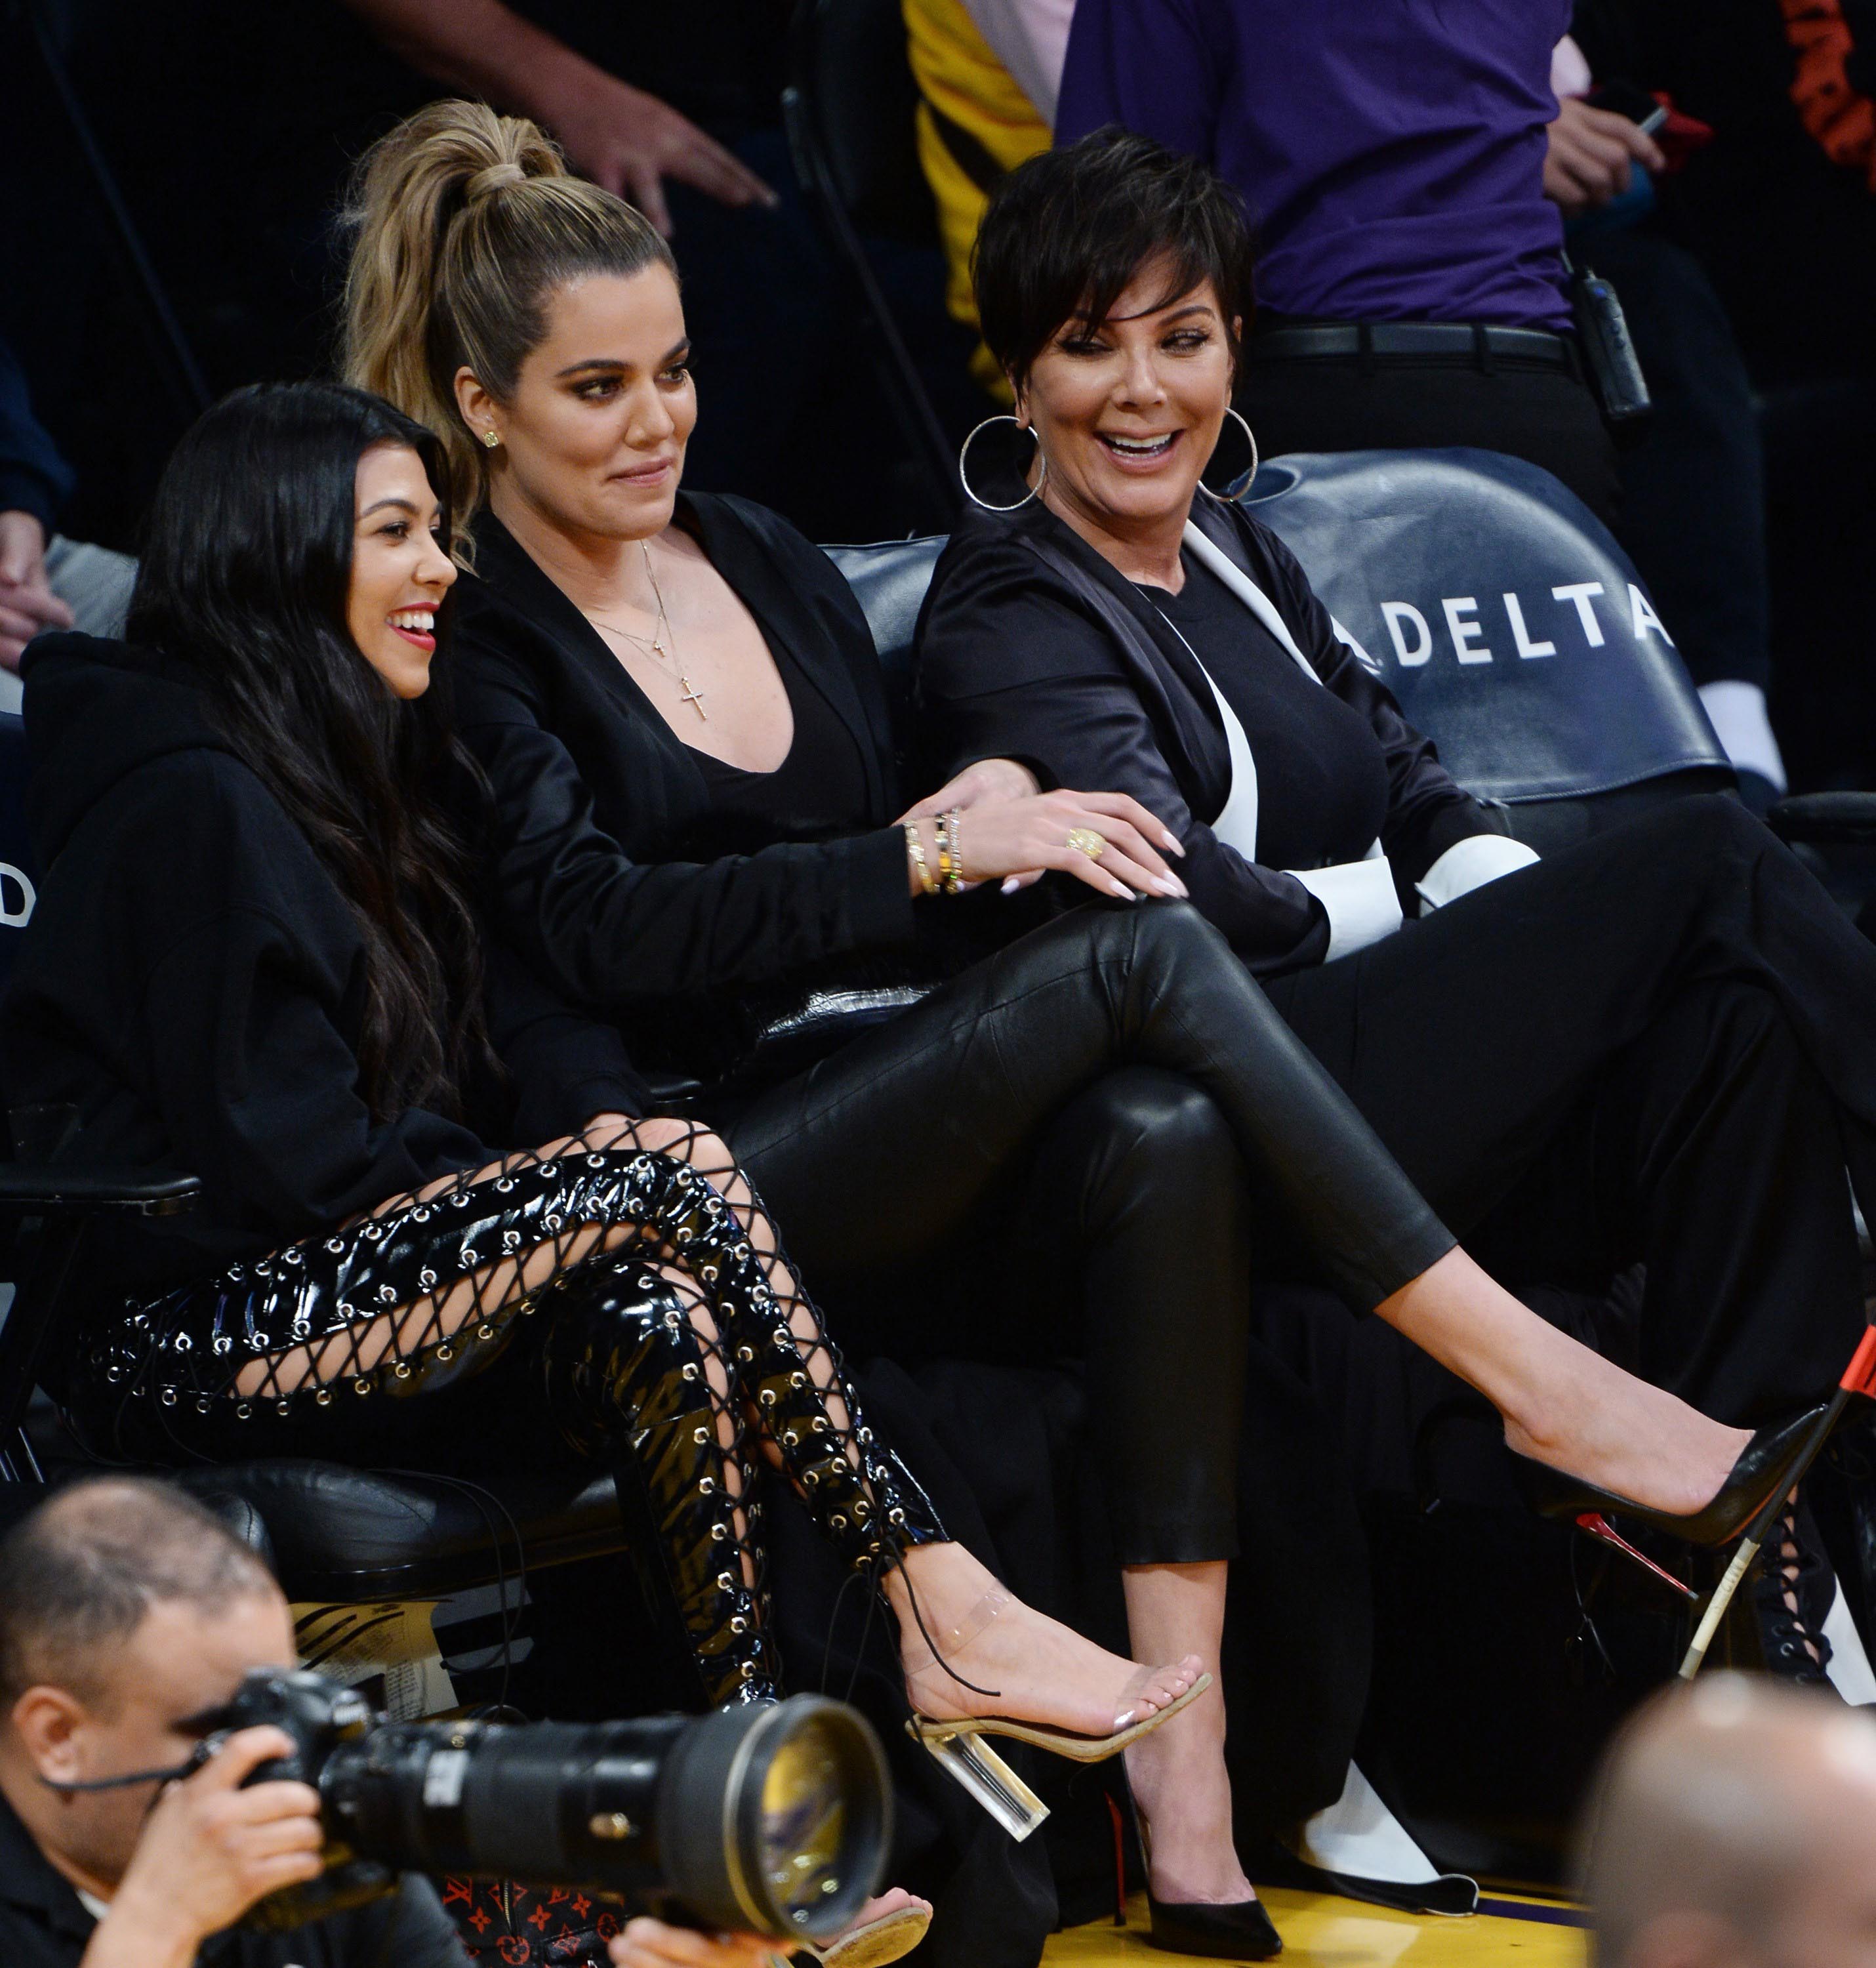 Kourtney & Khloe Kardashian attend LA Lakers vs Cavaliers Game